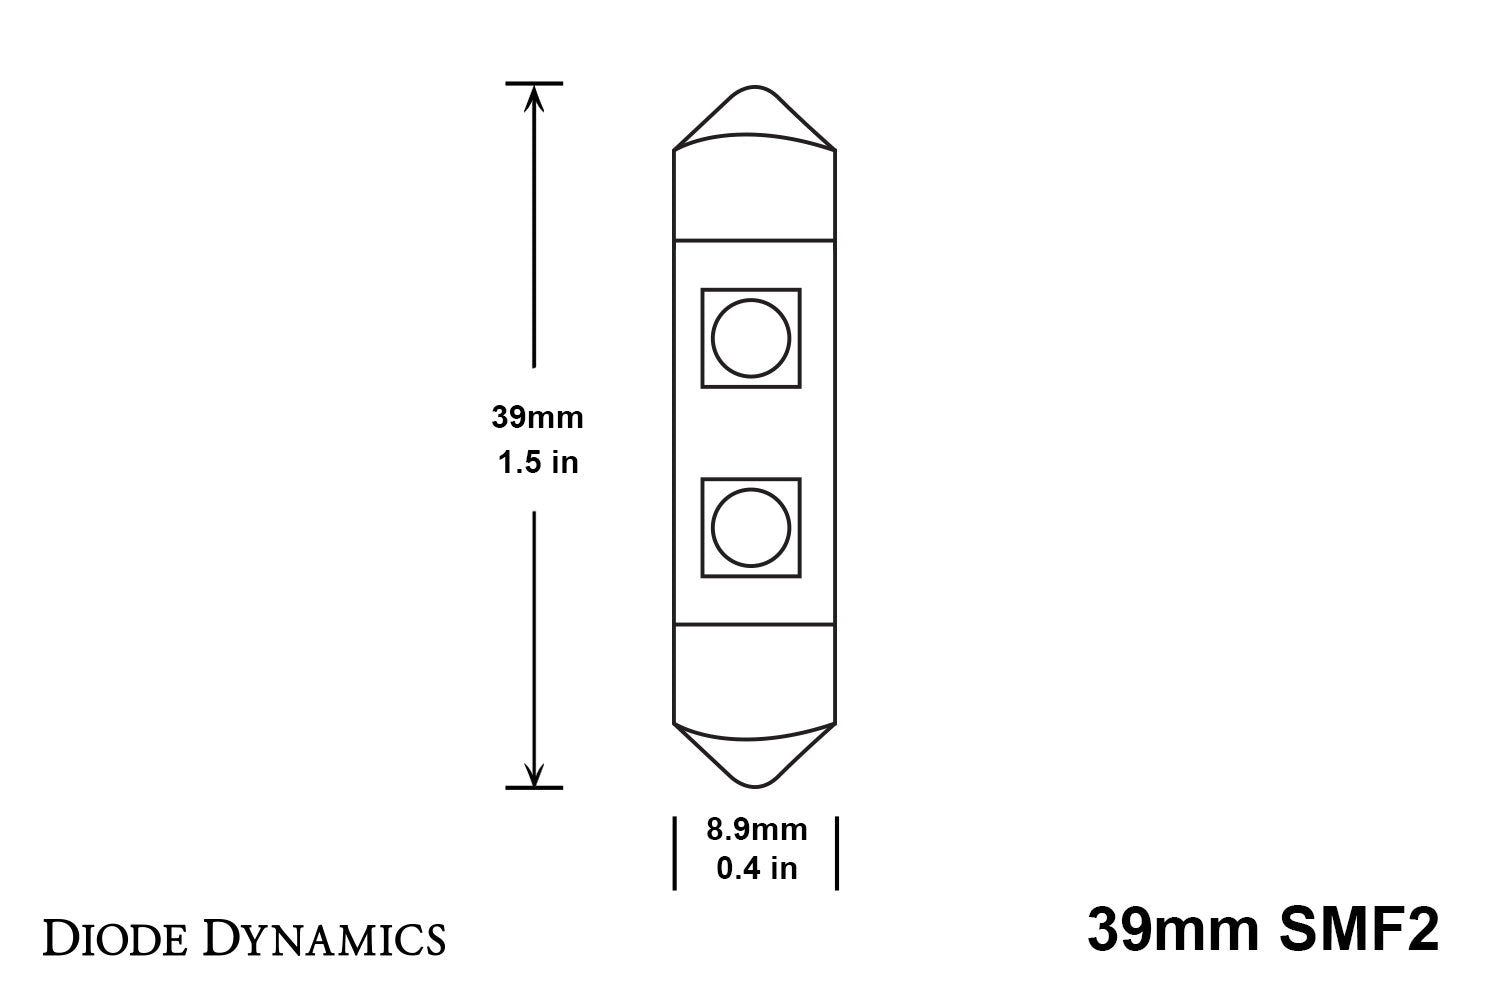 39mm SMF2 LED Bulb Cool White Single Diode Dynamics